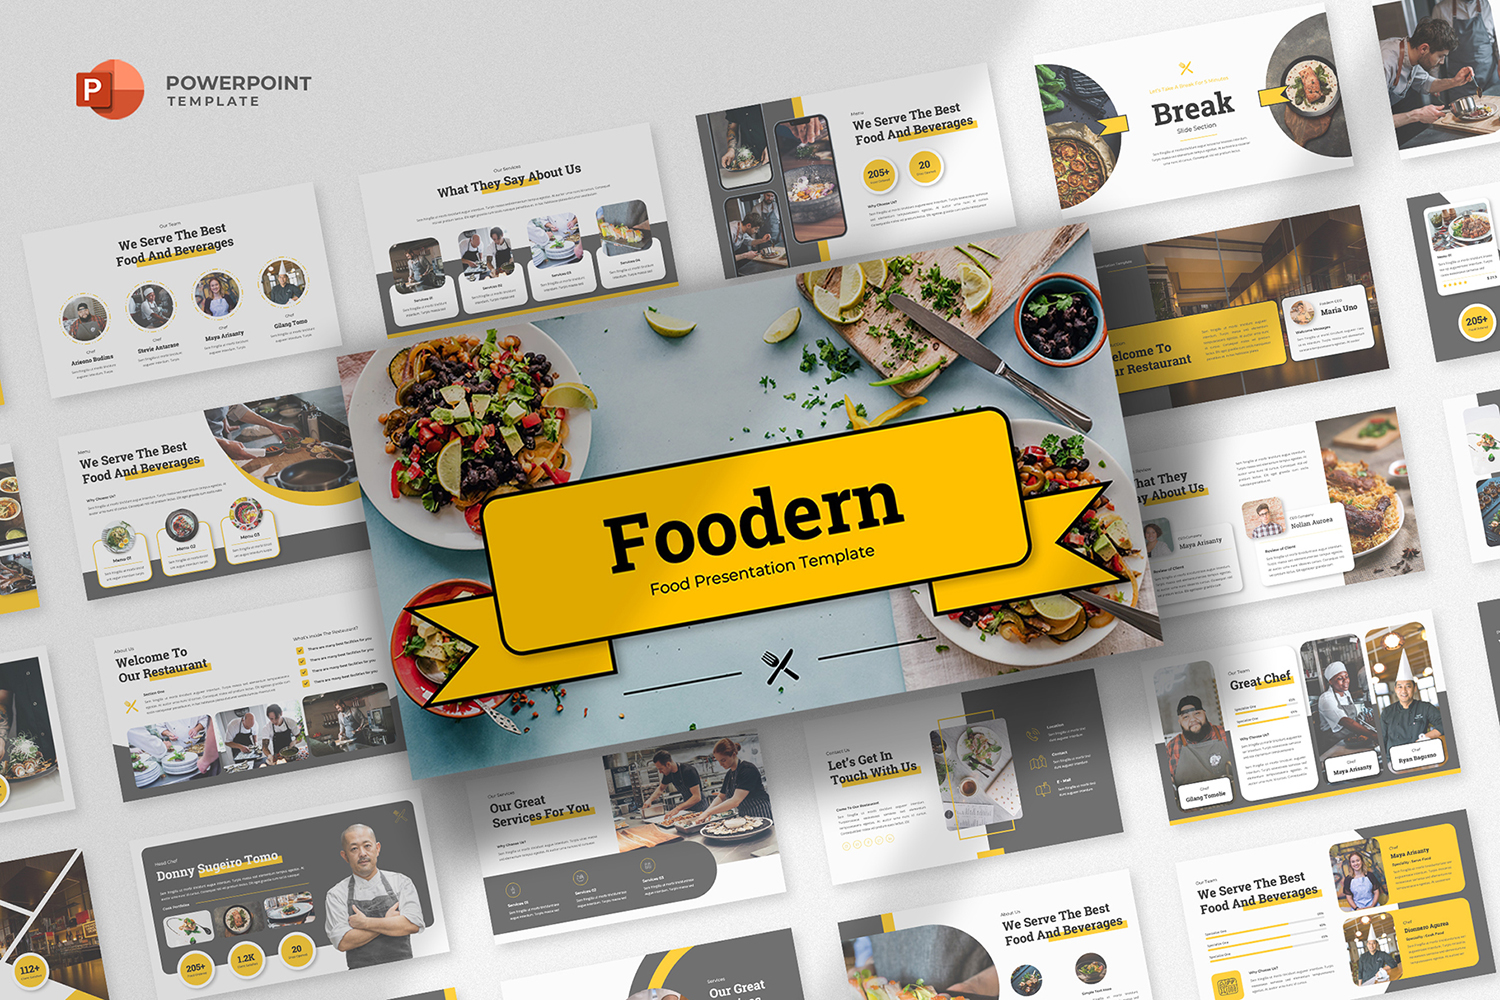 Foodern - Food and Beverage Powerpoint Template